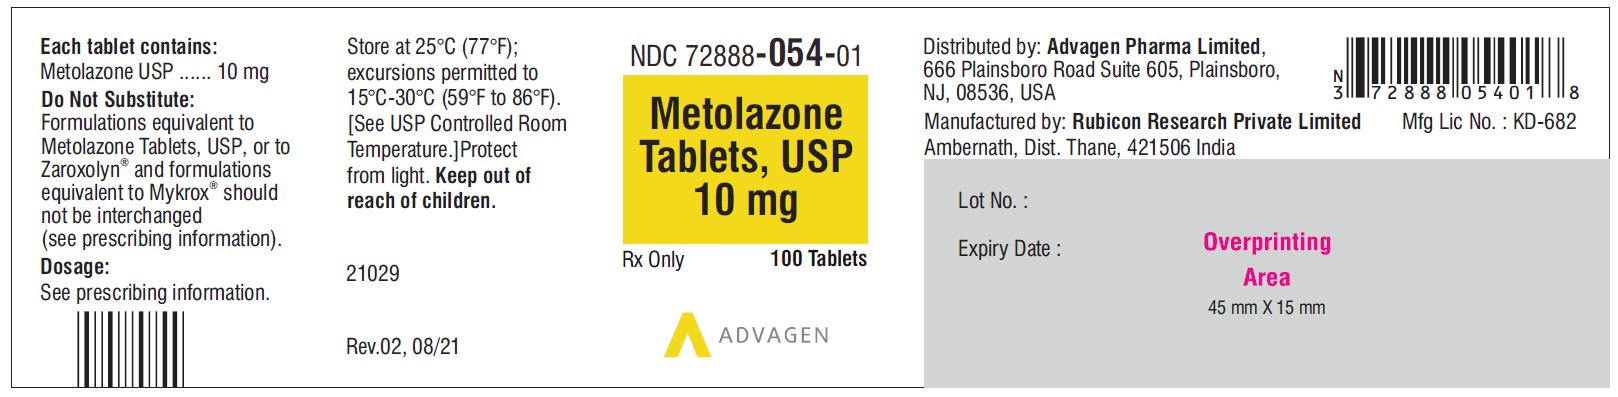 Metolazone Tablets USP, 10mg - NDC 72888-054-01 - 100 Tablets Bottle Label